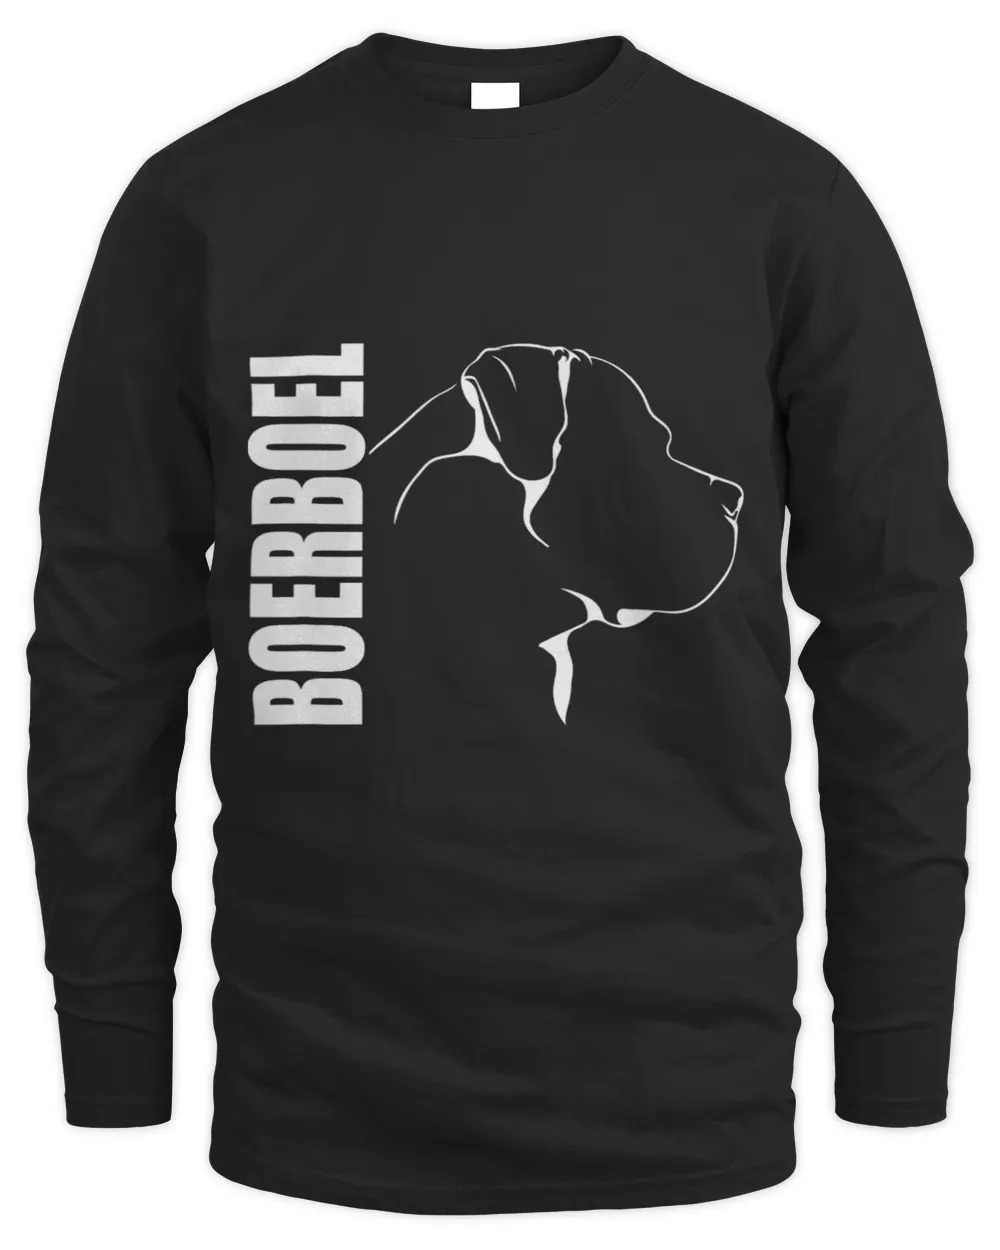 Proud Boerboel profile dog breed dog 14